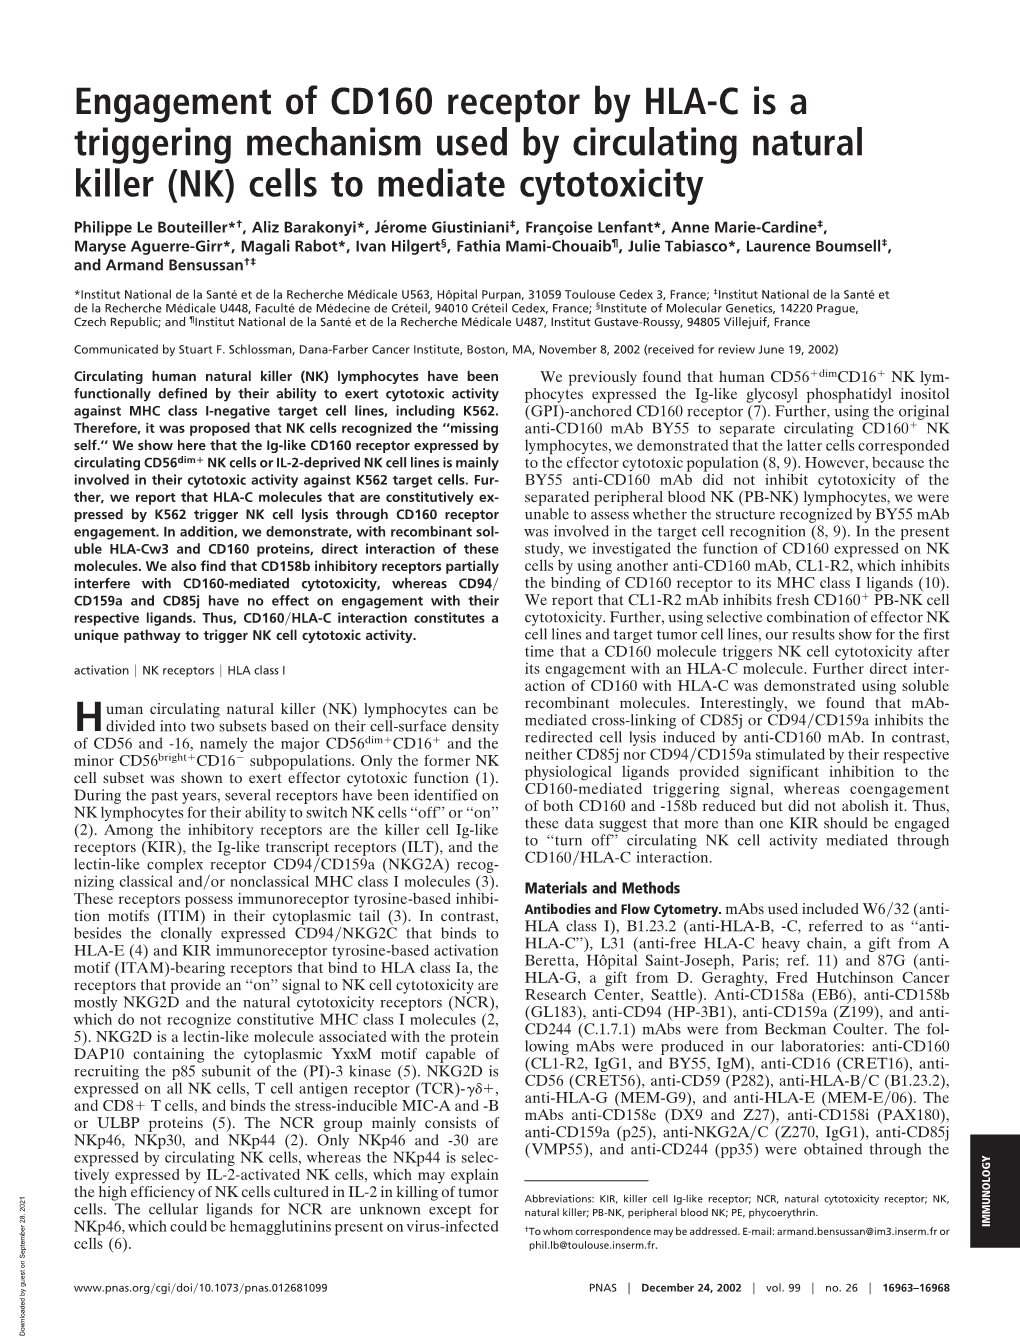 (NK) Cells to Mediate Cytotoxicity